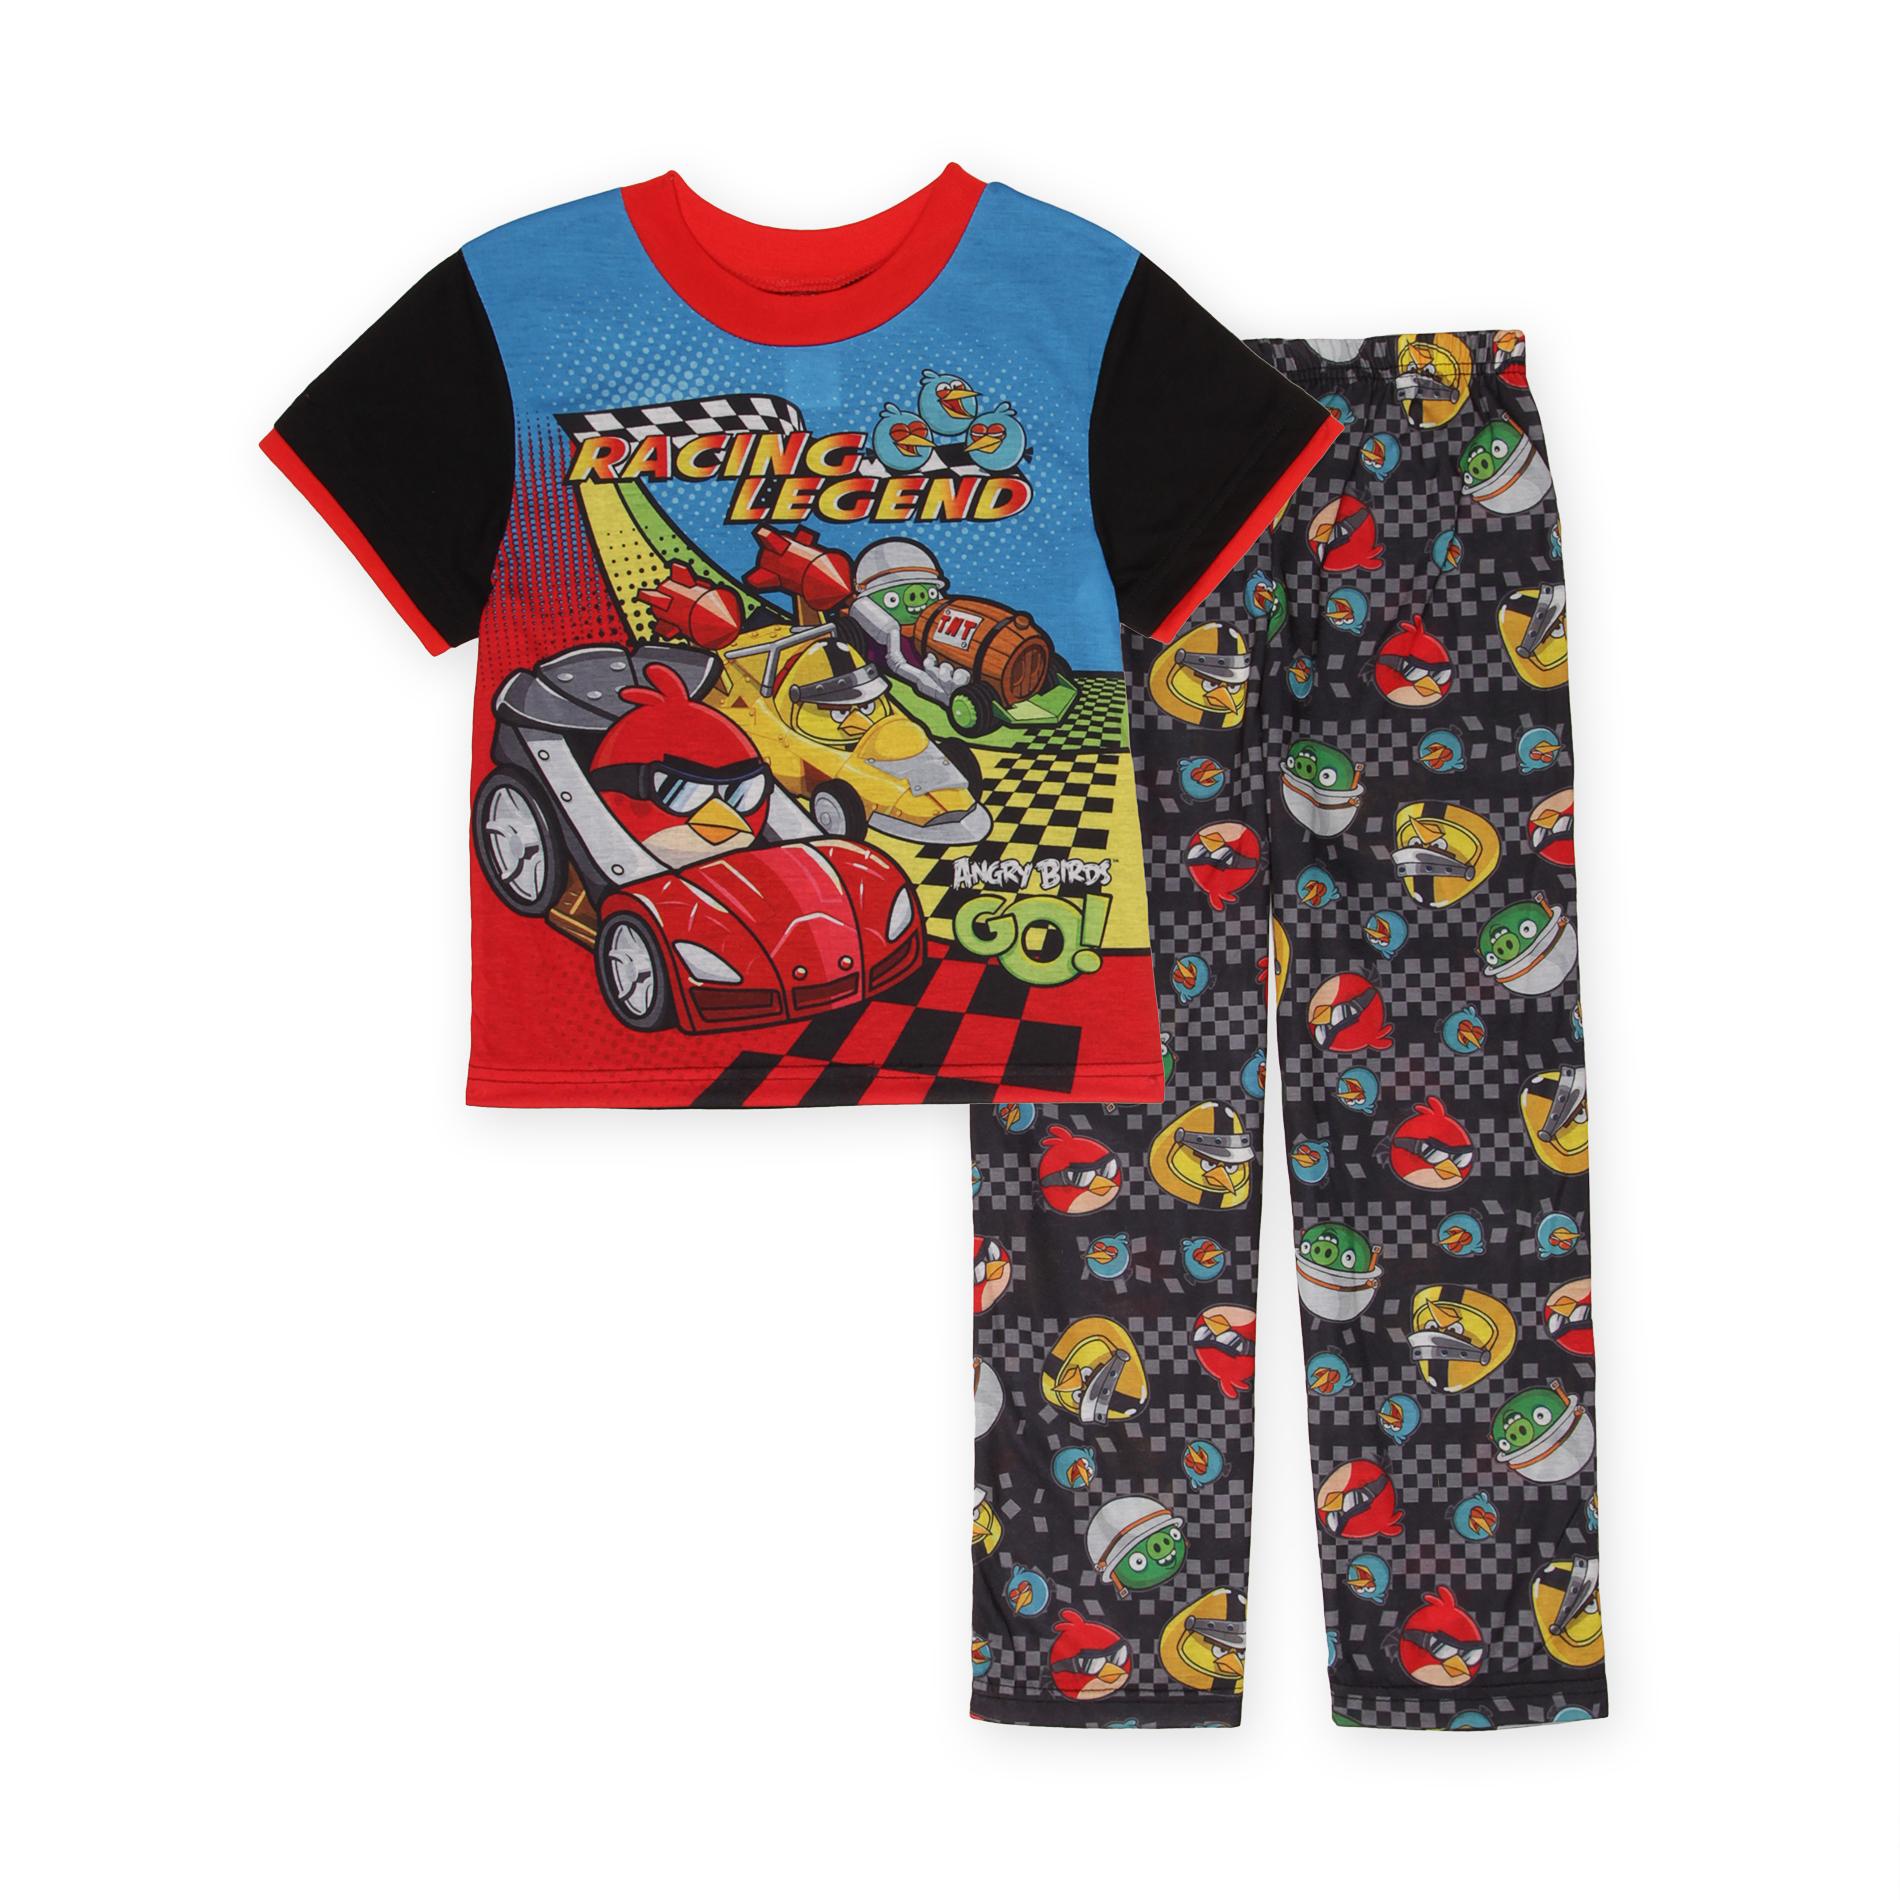 Angry Birds Boy's Pajama Shirt & Pants - Racing Legend